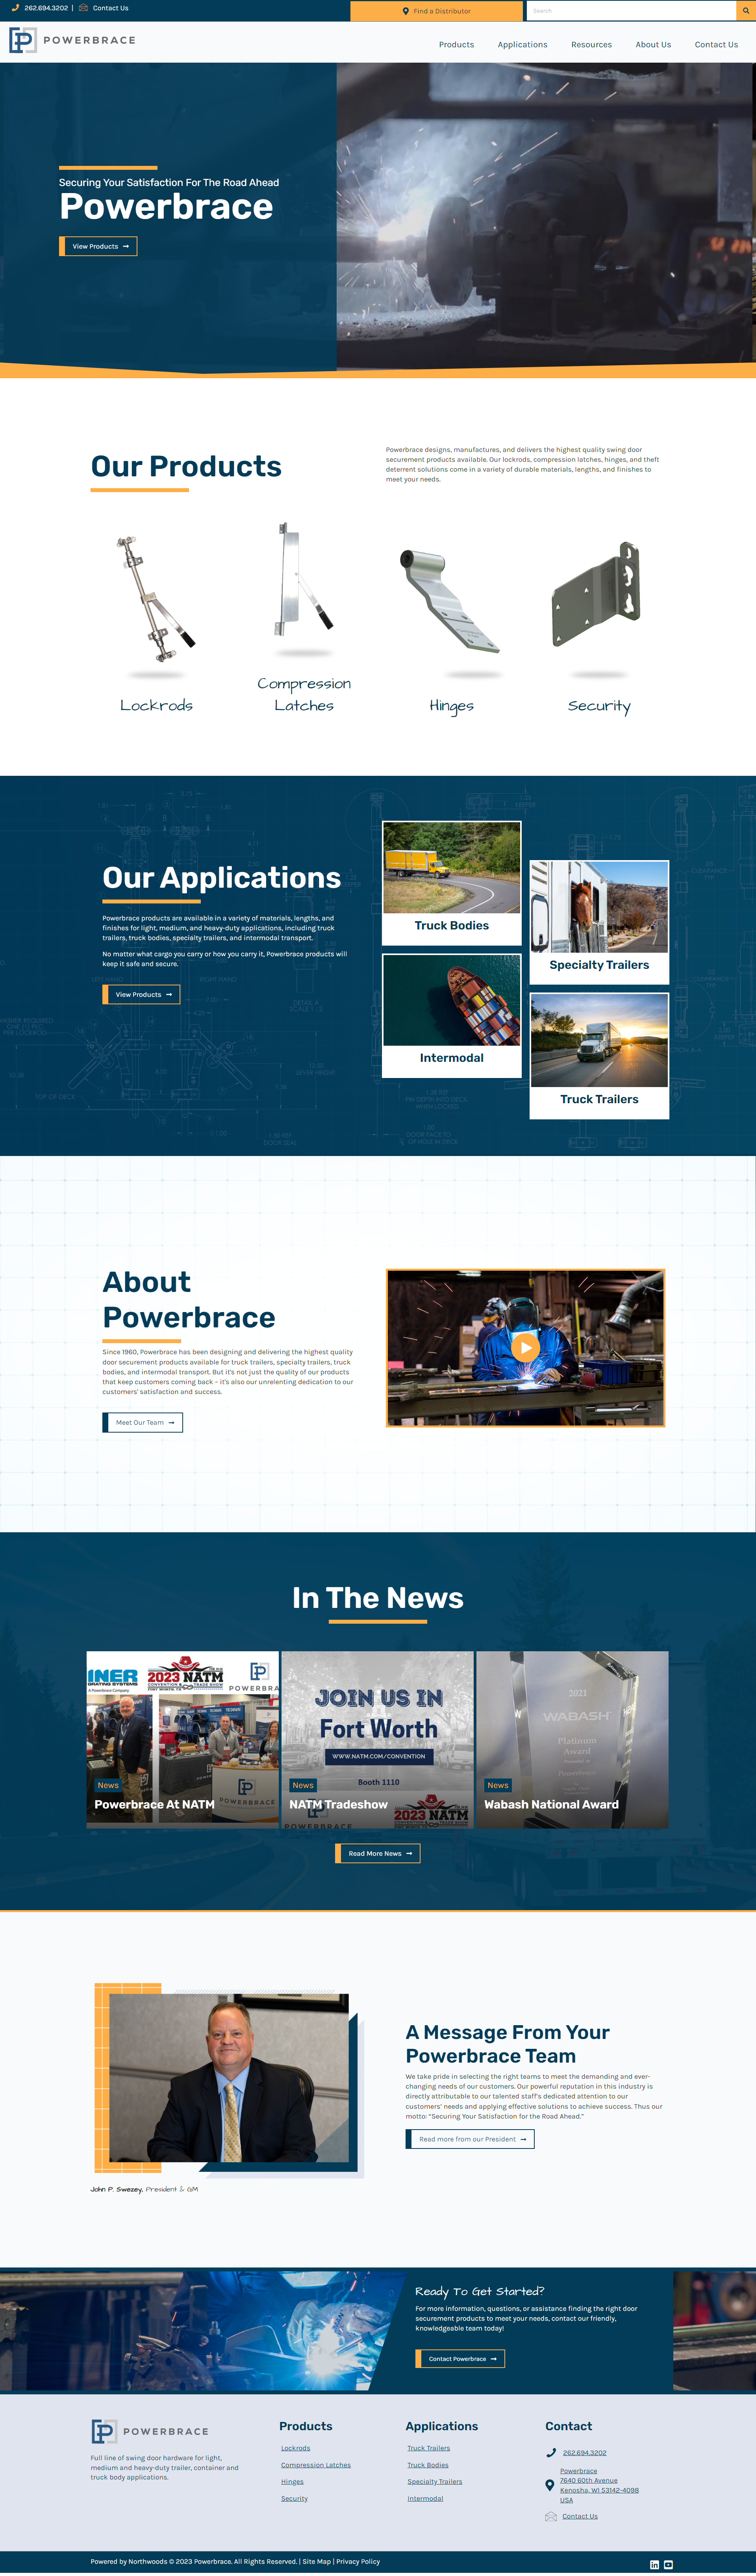 Powerbrace Website Redesign image